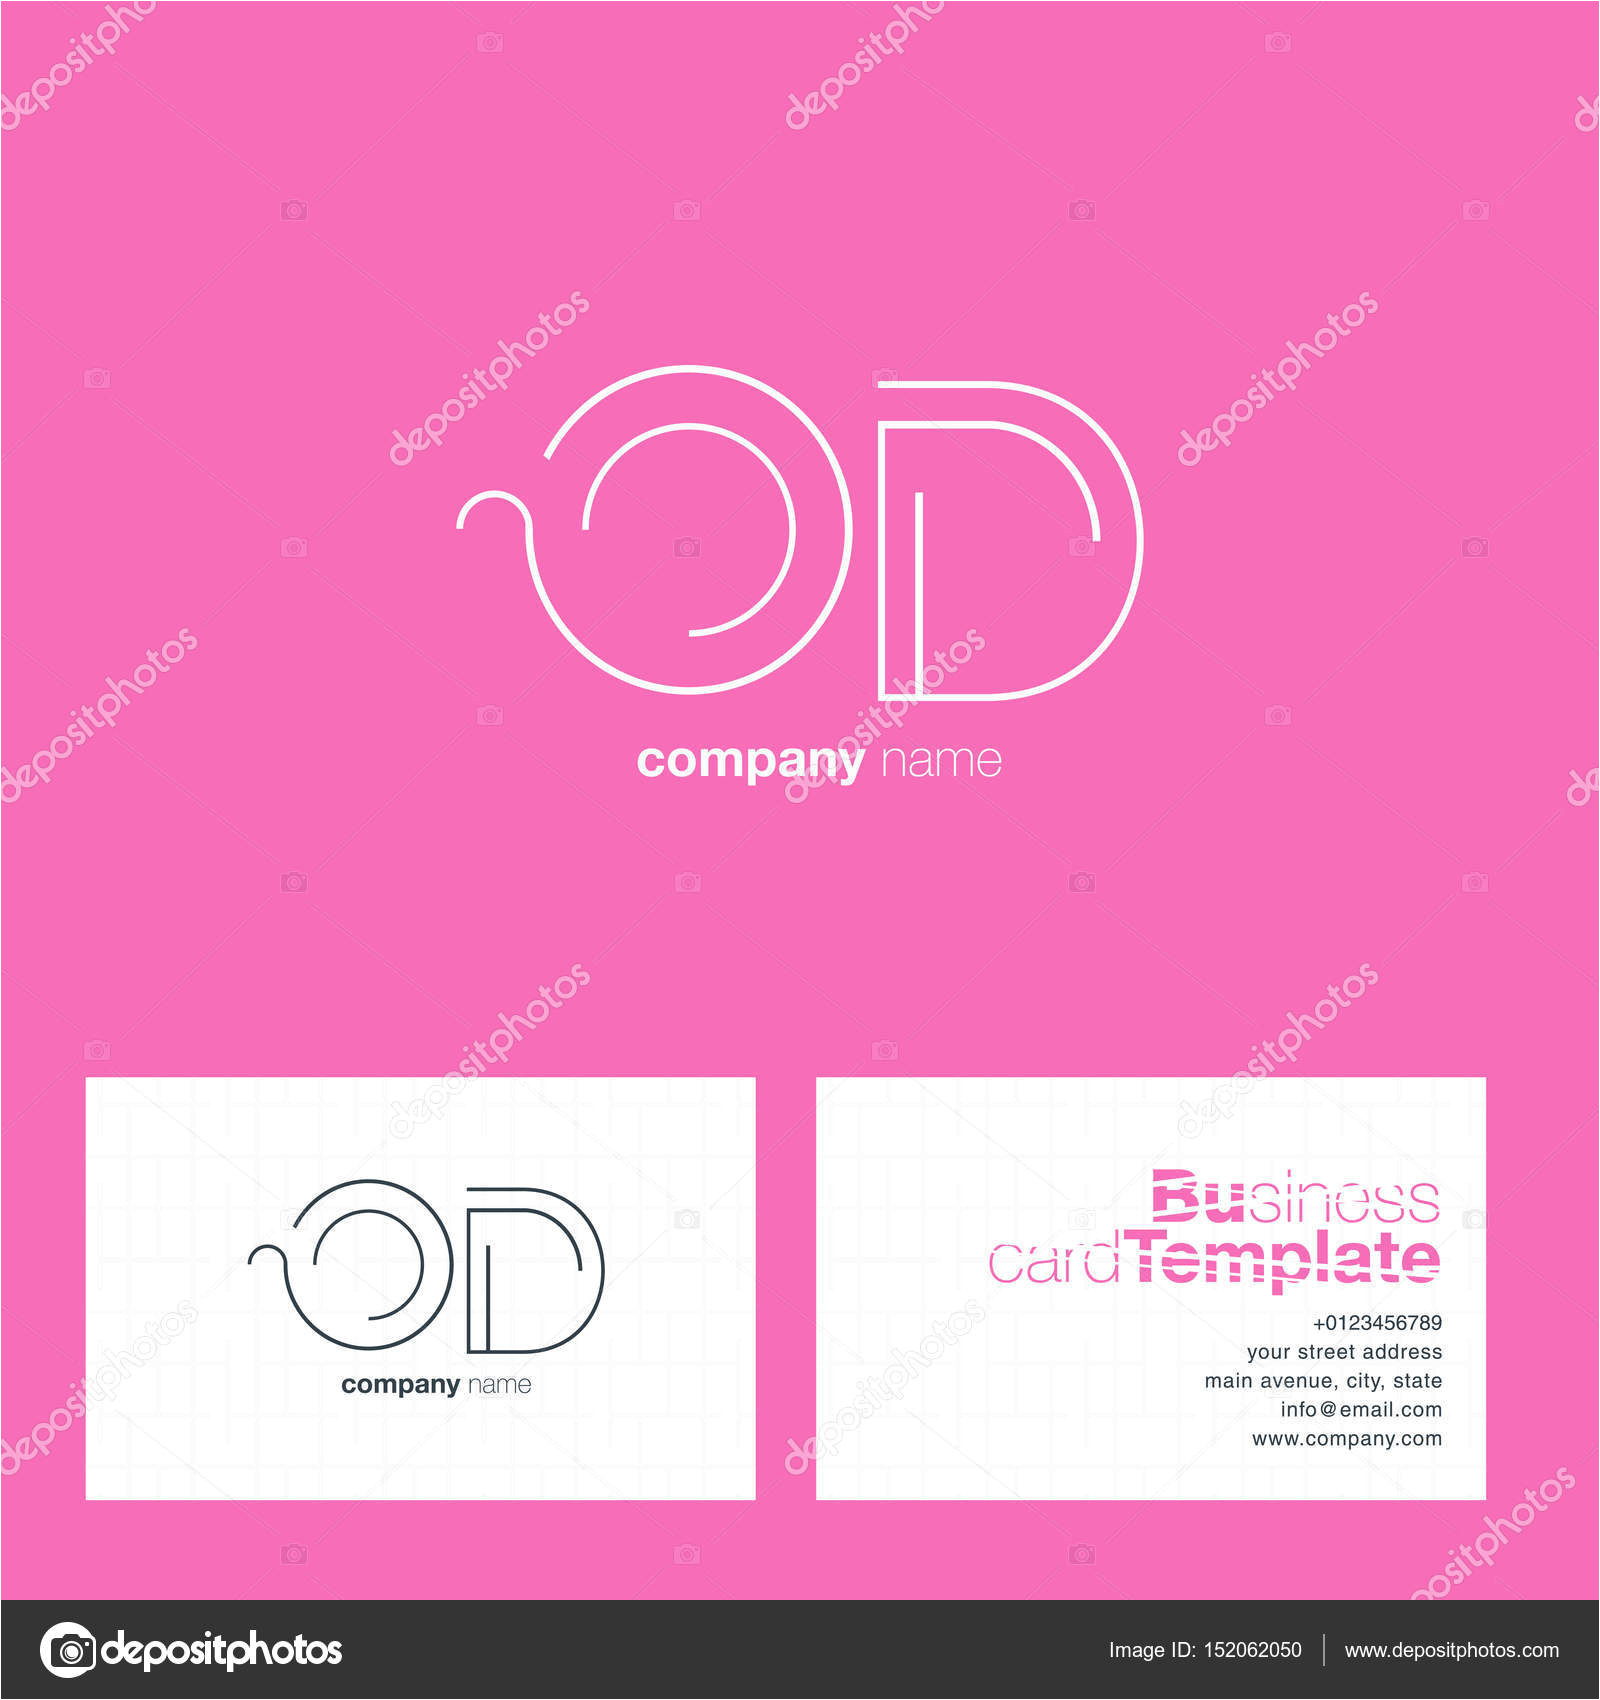 business card template size fresh design circle business of modern business card templates free of modern business card templates free jpg